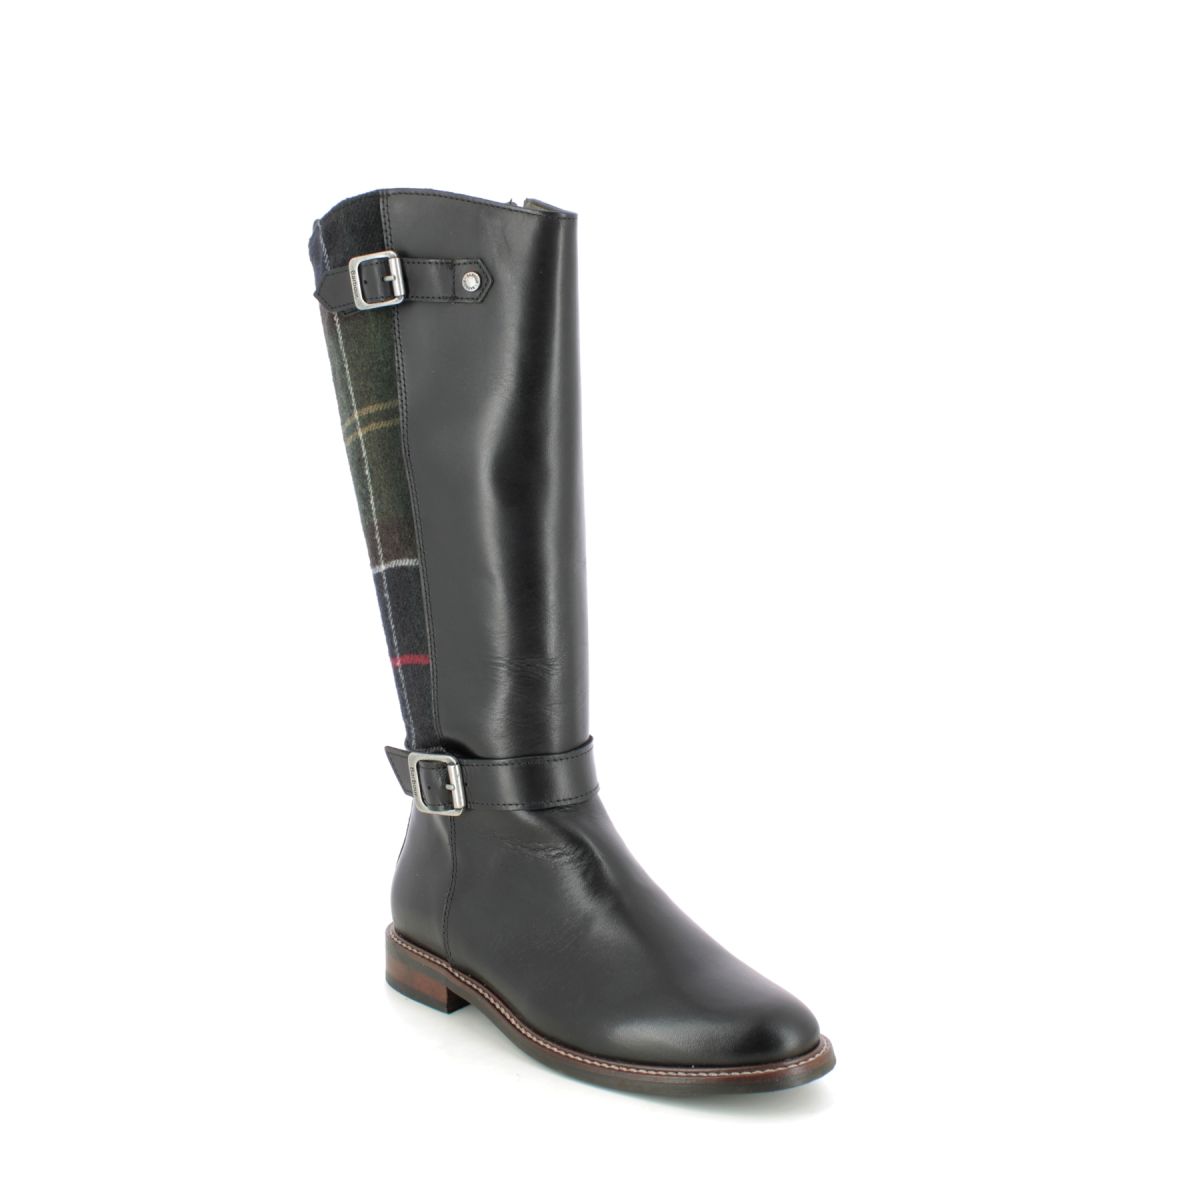 Barbour Wren Tartan Black Leather Boots Lfo0552-Bk32 In Size 7 In Plain Black Leather